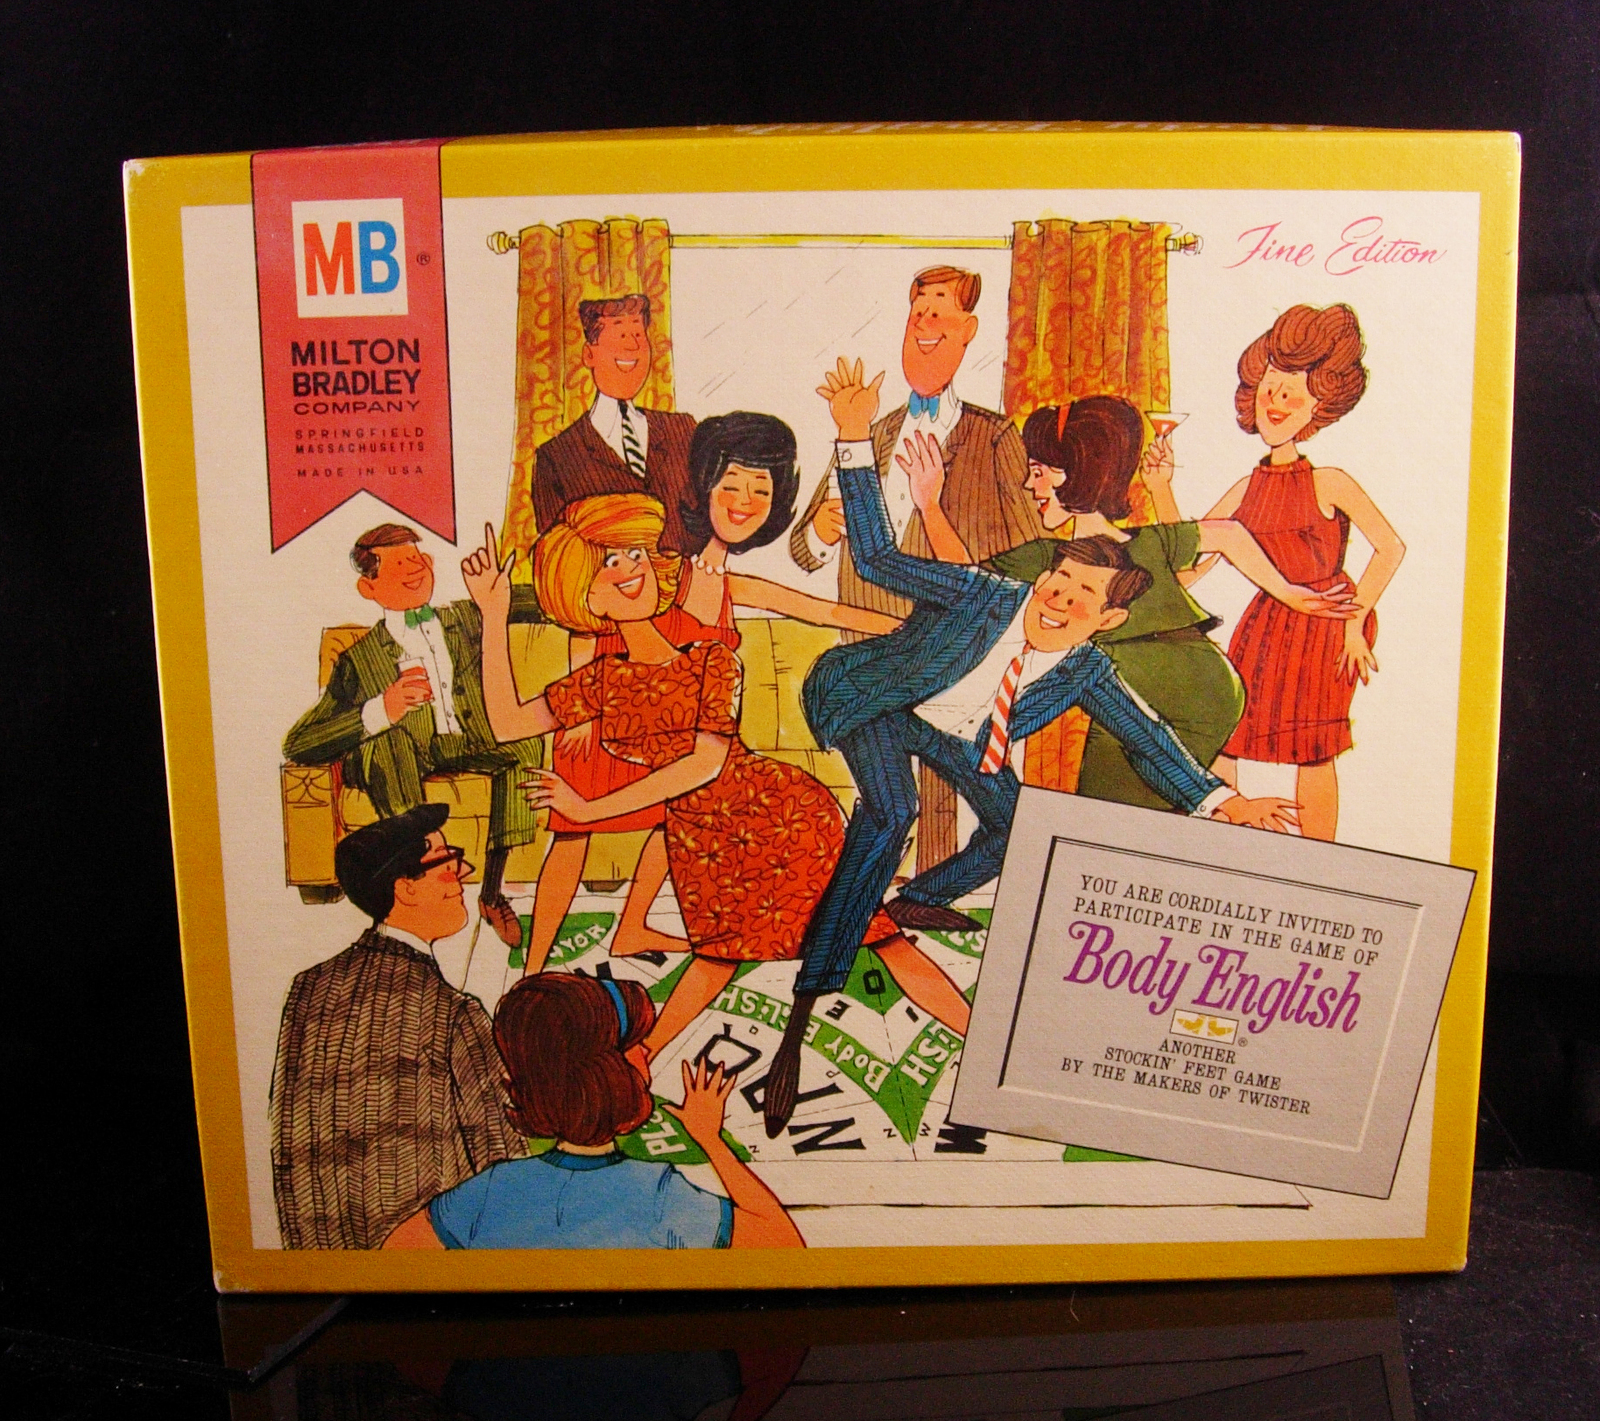 1967 Body English game - Like twister - all original - Milton Bradley -vintage b - $30.00